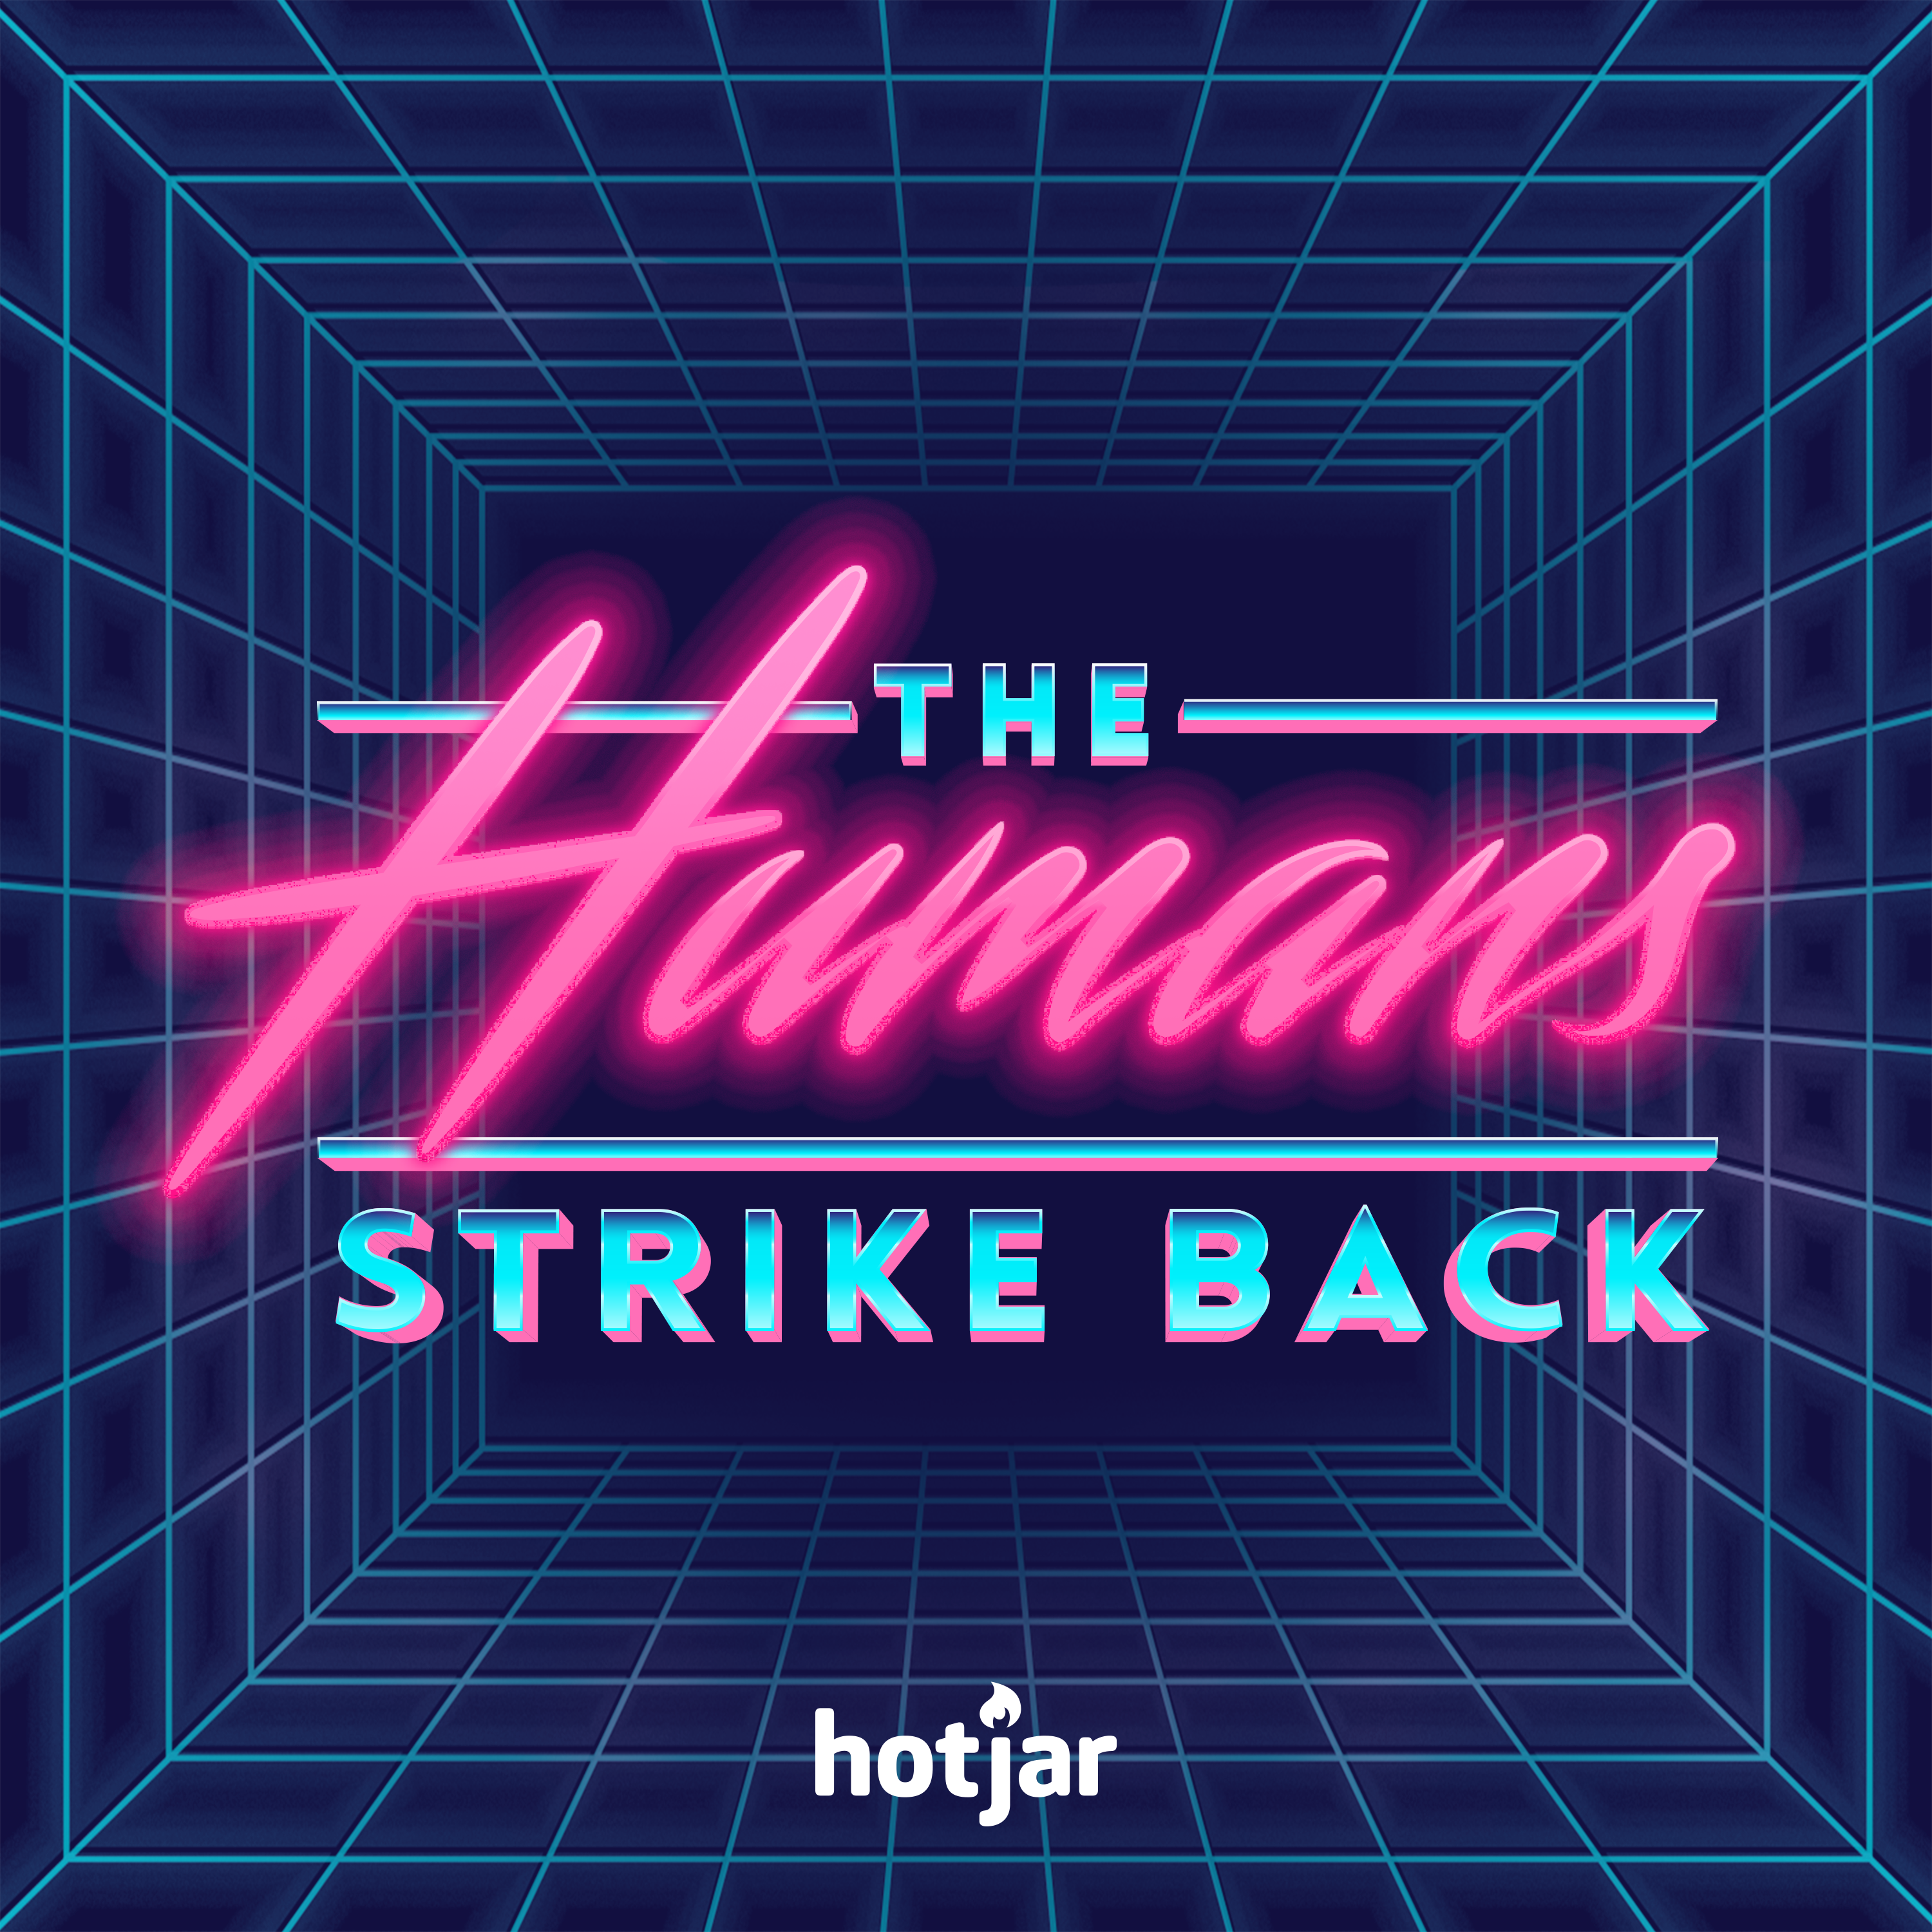 'The Humans Strike Back' by Hotjar